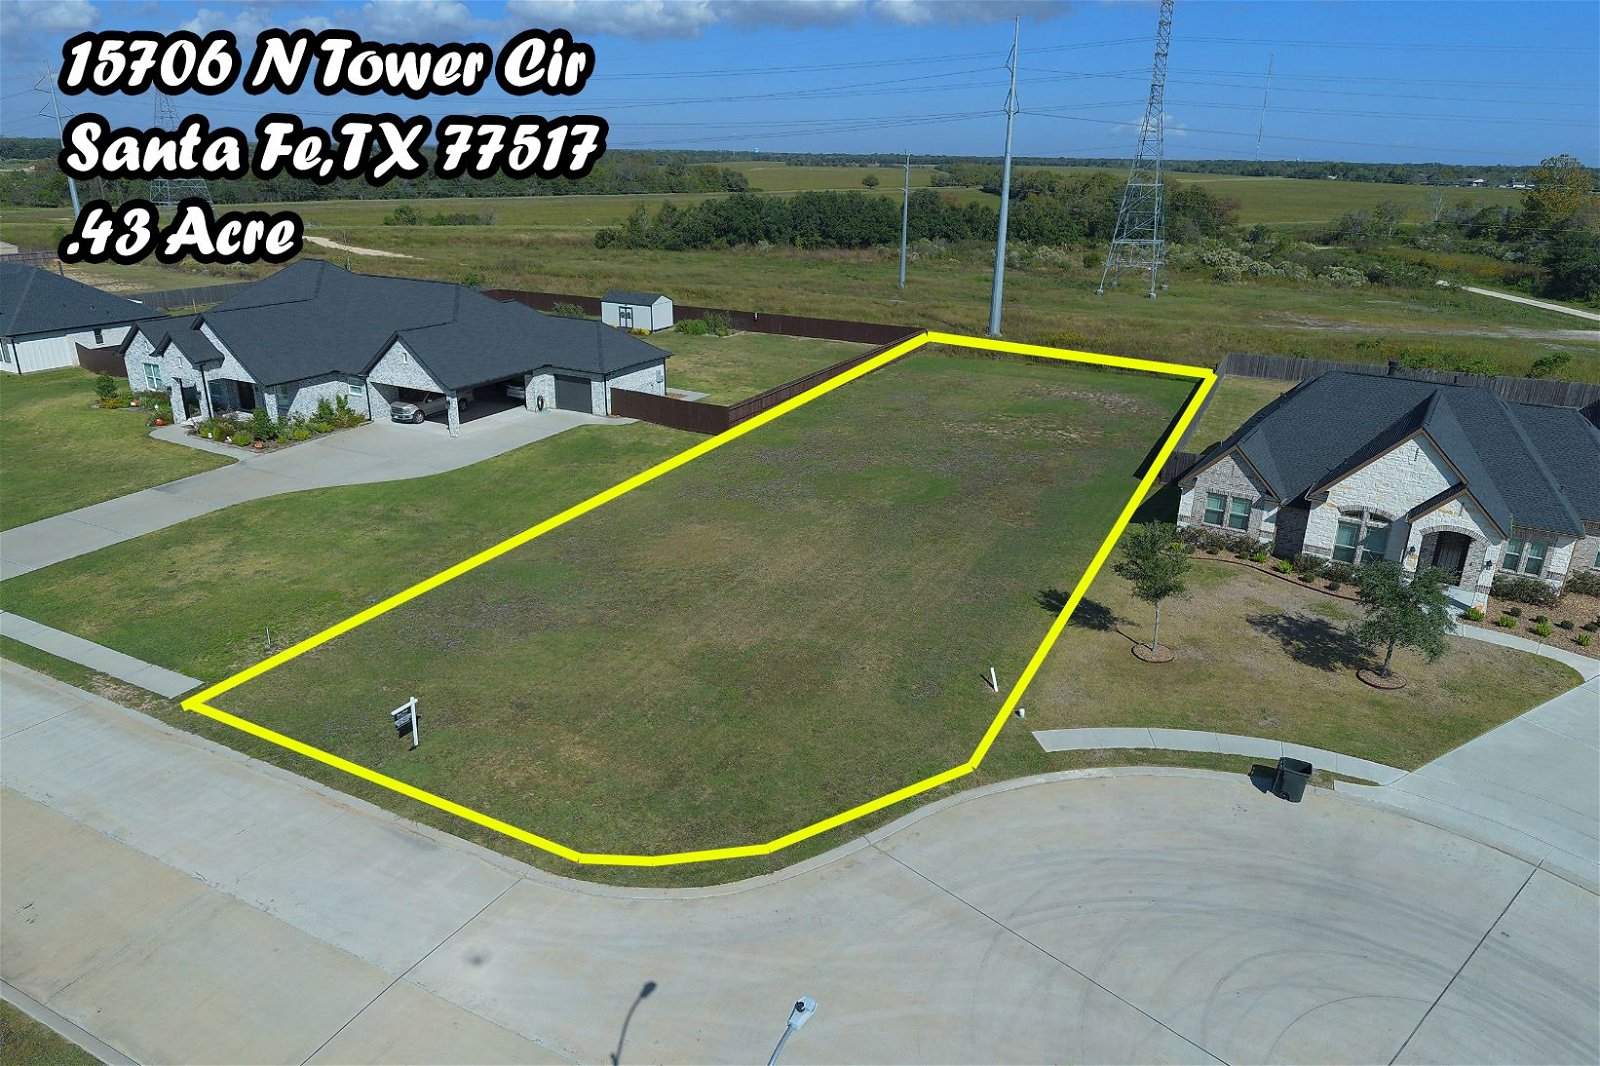 Real estate property located at 15706 Tower, Galveston, Tower Road Estates Ph 1, Santa Fe, TX, US